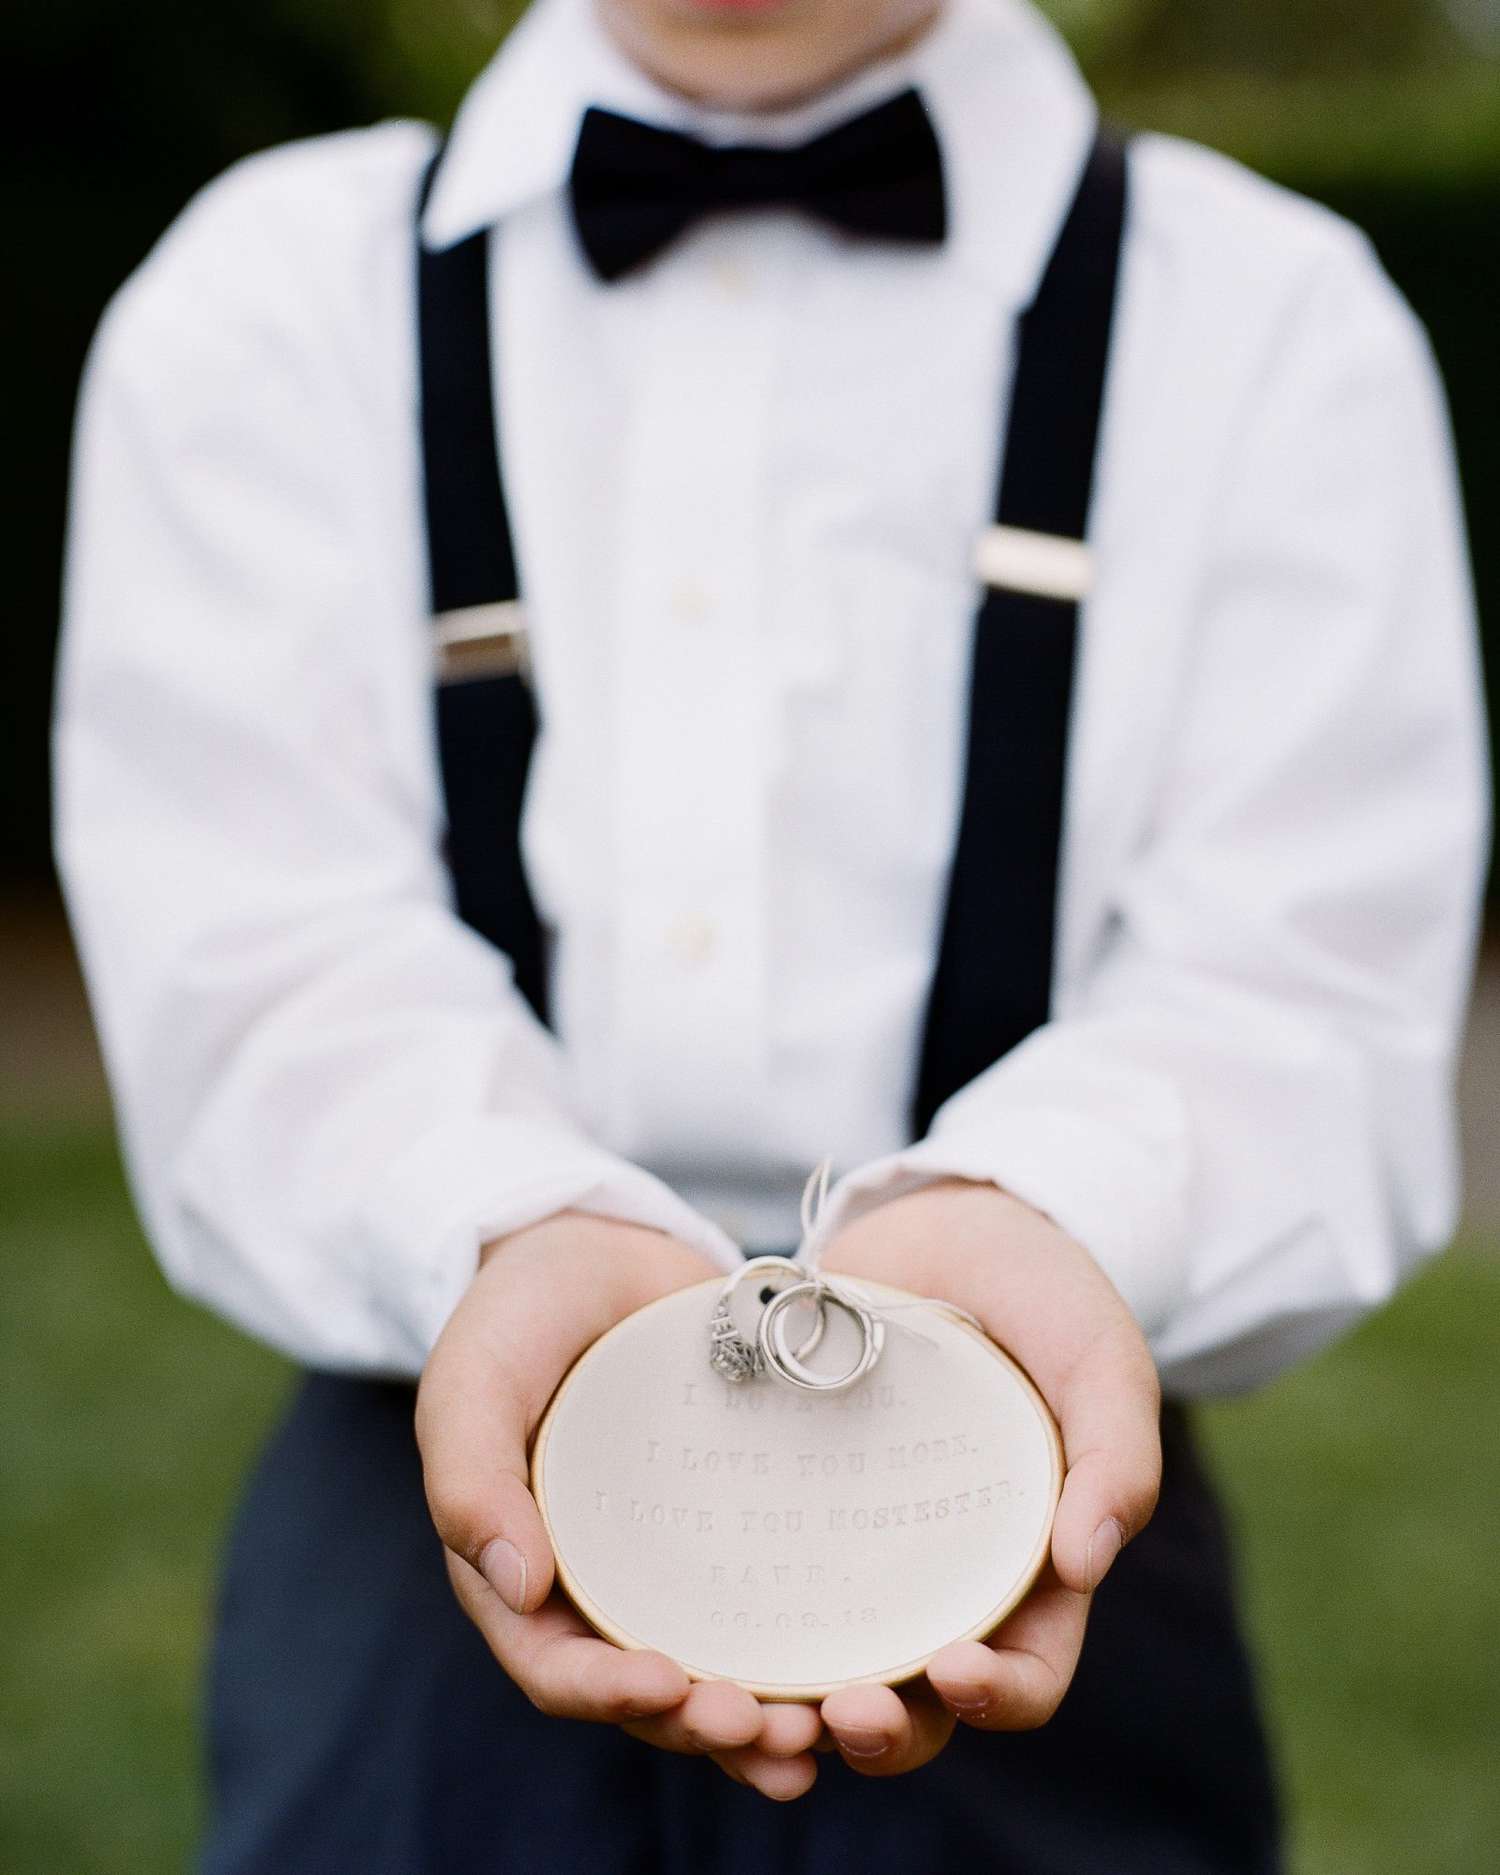 ring bearer holding decorative dish at wedding